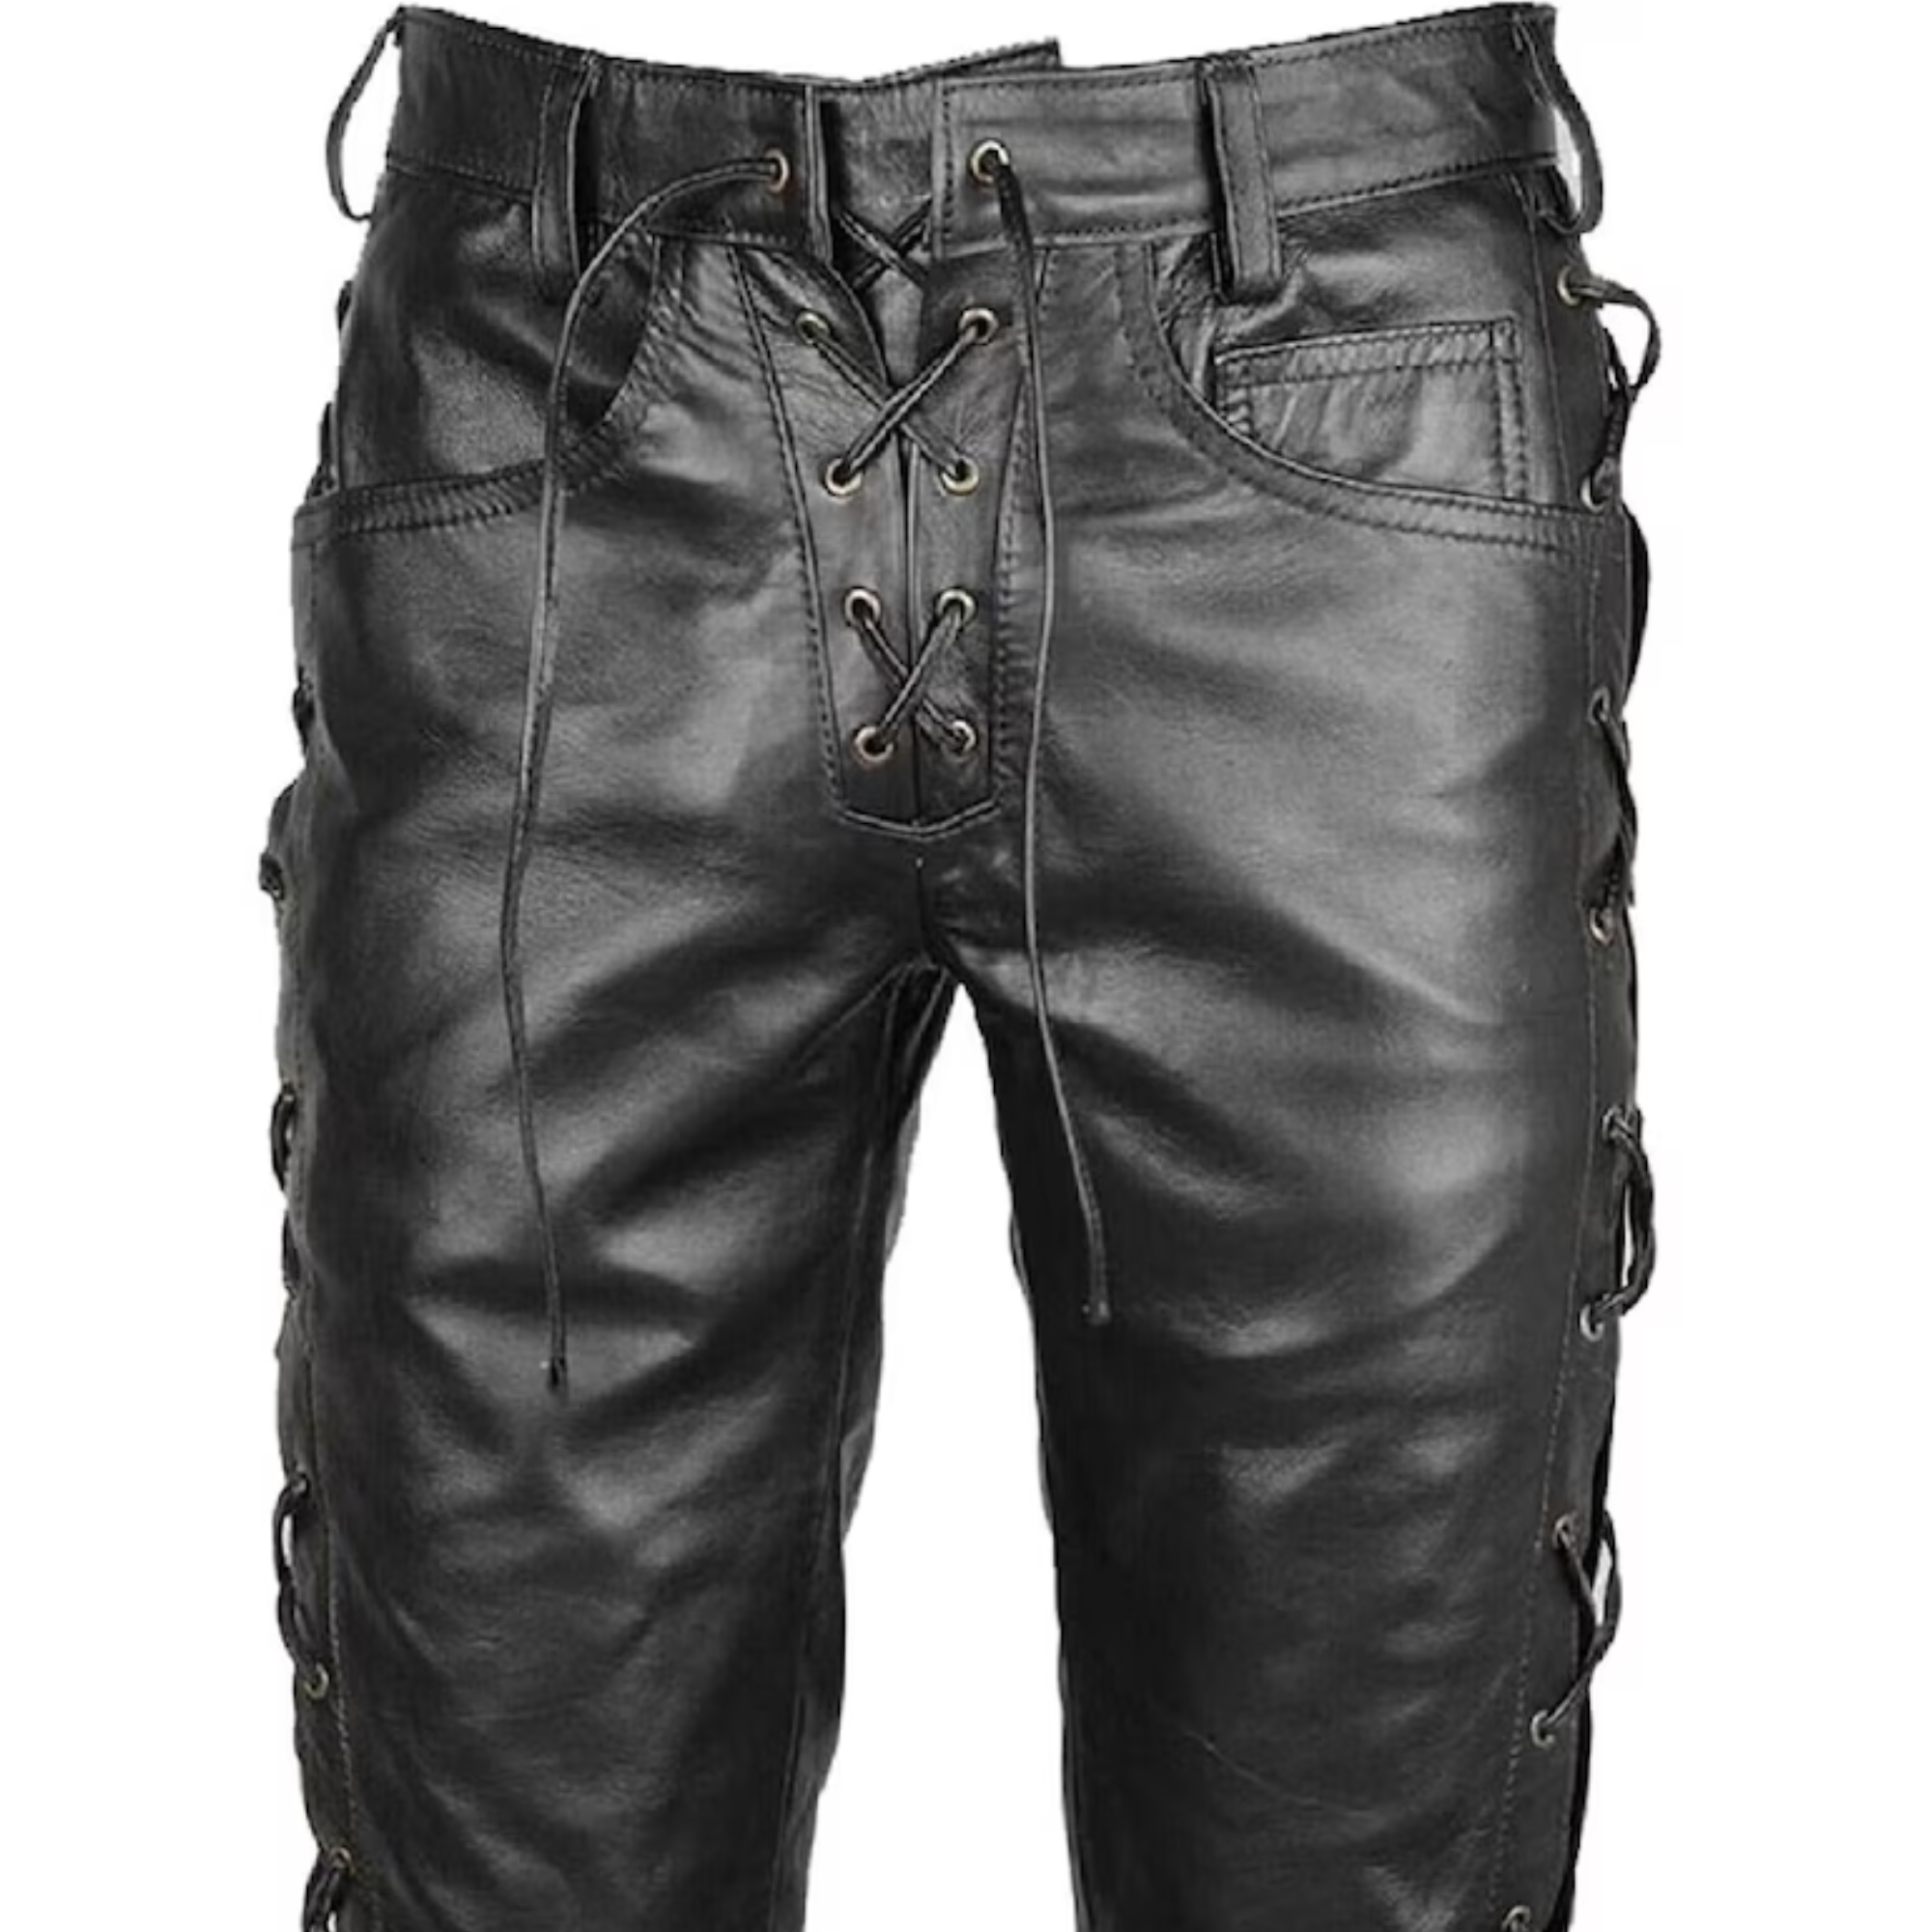 Leather Pants Men, Leather Pants, Biker Leather Pants, Leather Trousers,  Black Leather Pants, Biker Trousers, White Leather Pants Men - Etsy India